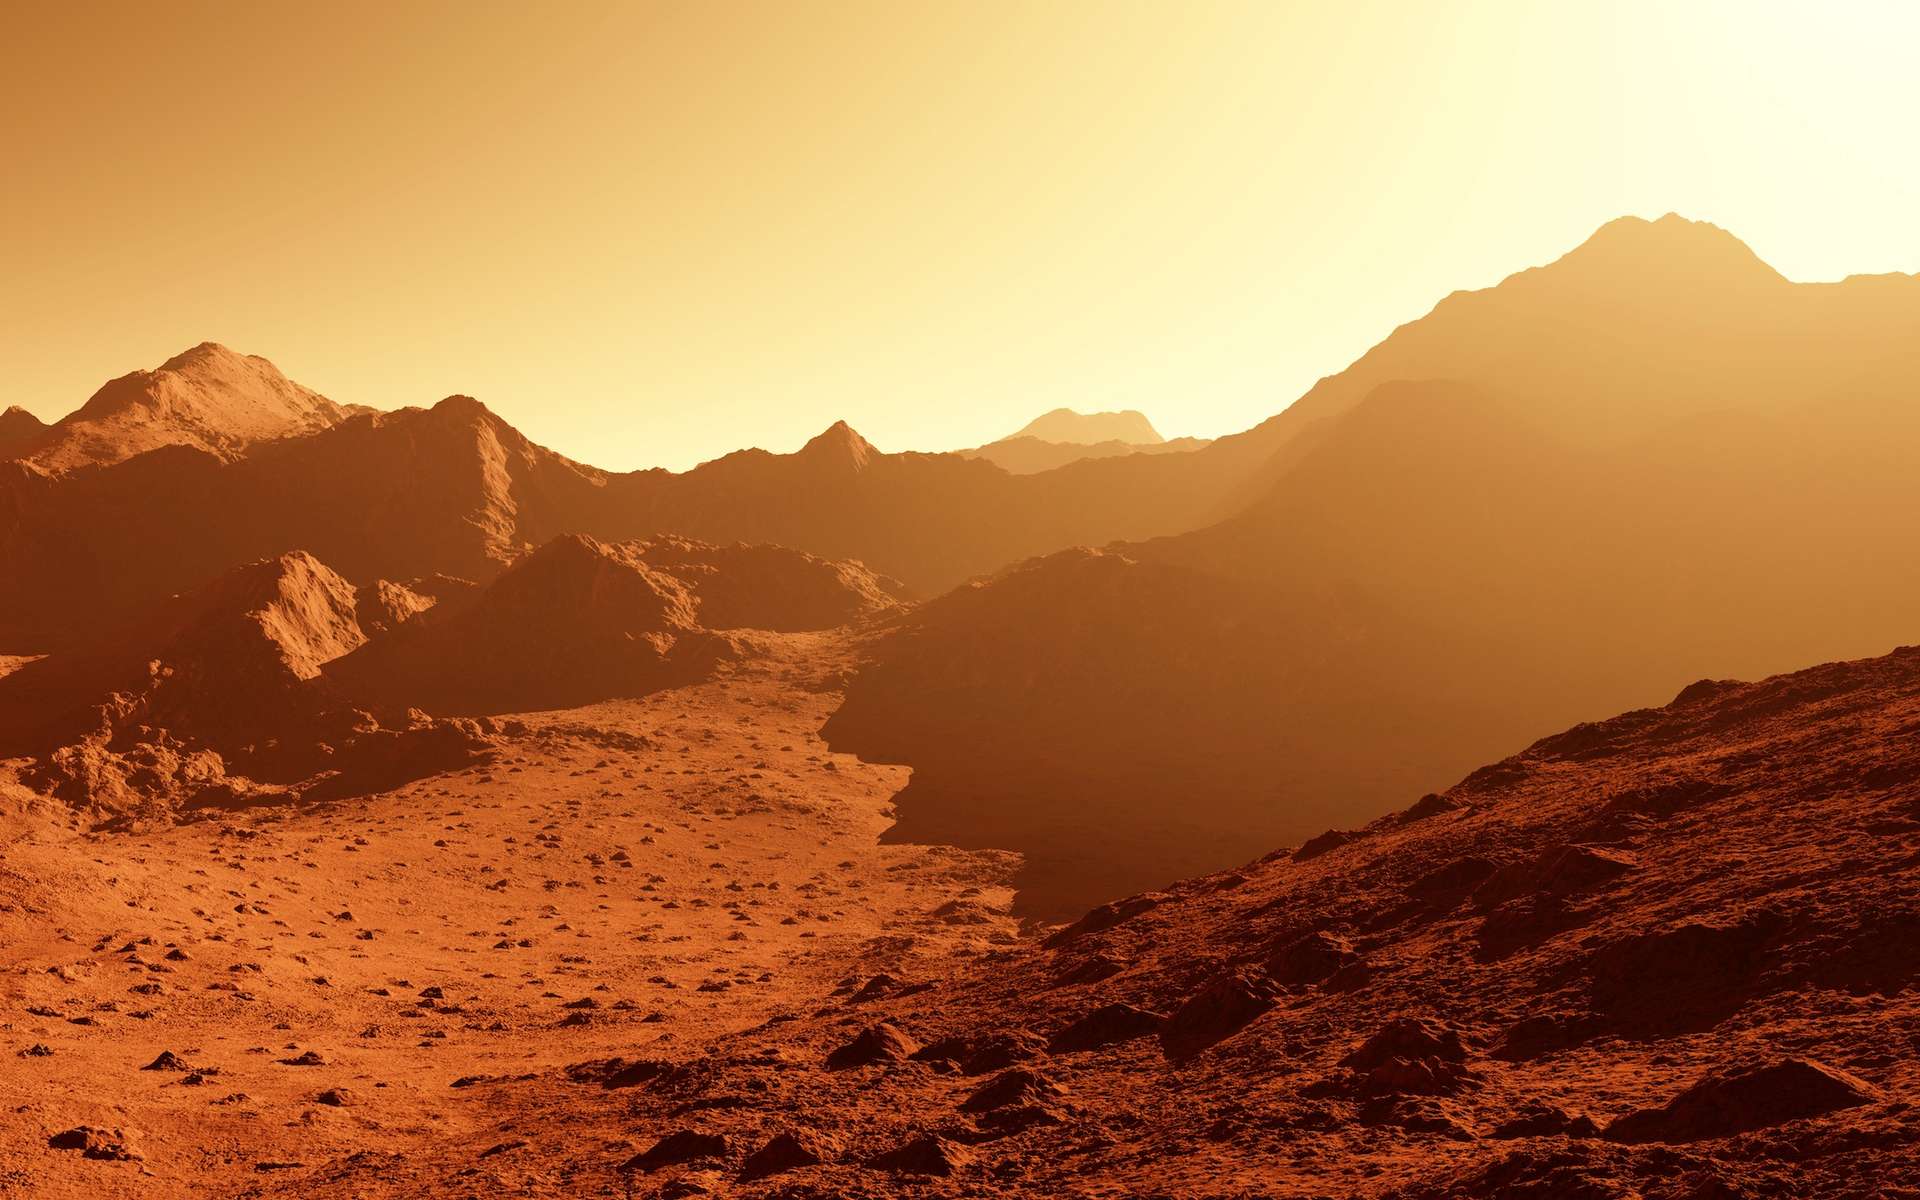 Paysage martien au lever du Soleil (illustration). © Shawn Hempel, Adobe Stock